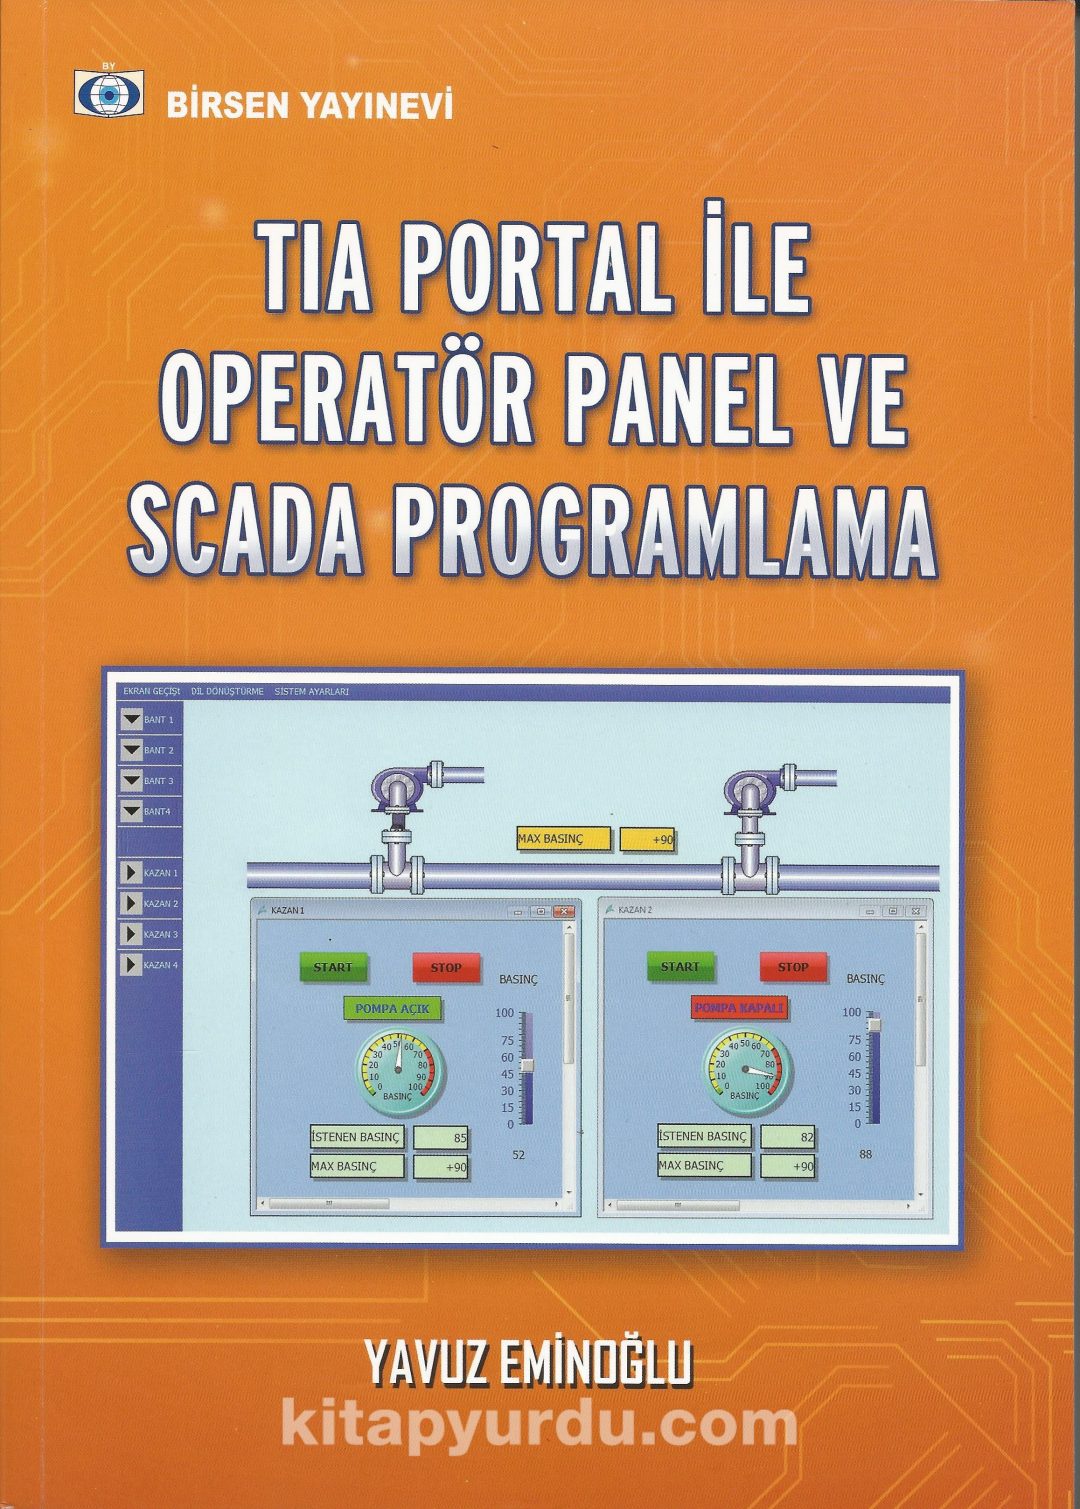 TIA Portal ile Operatör Panel ve Scada Programlama